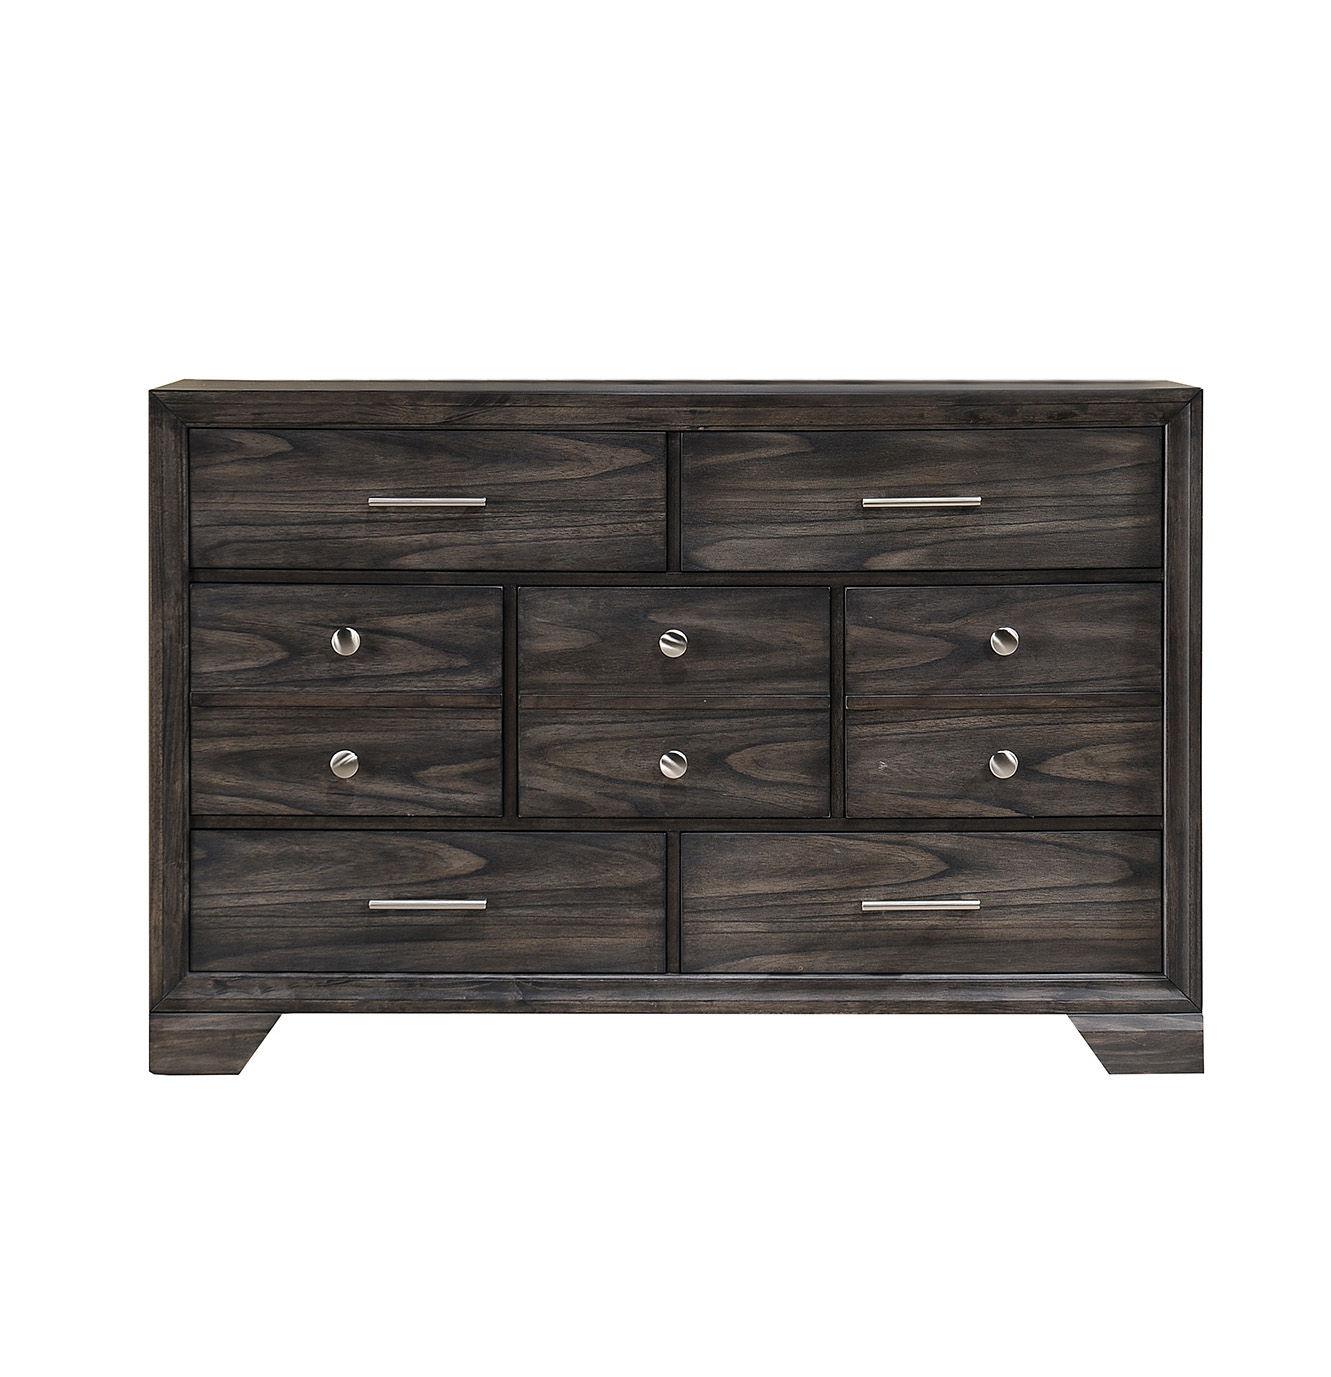 Crown Mark - Jaymes - Dresser, Mirror - 5th Avenue Furniture